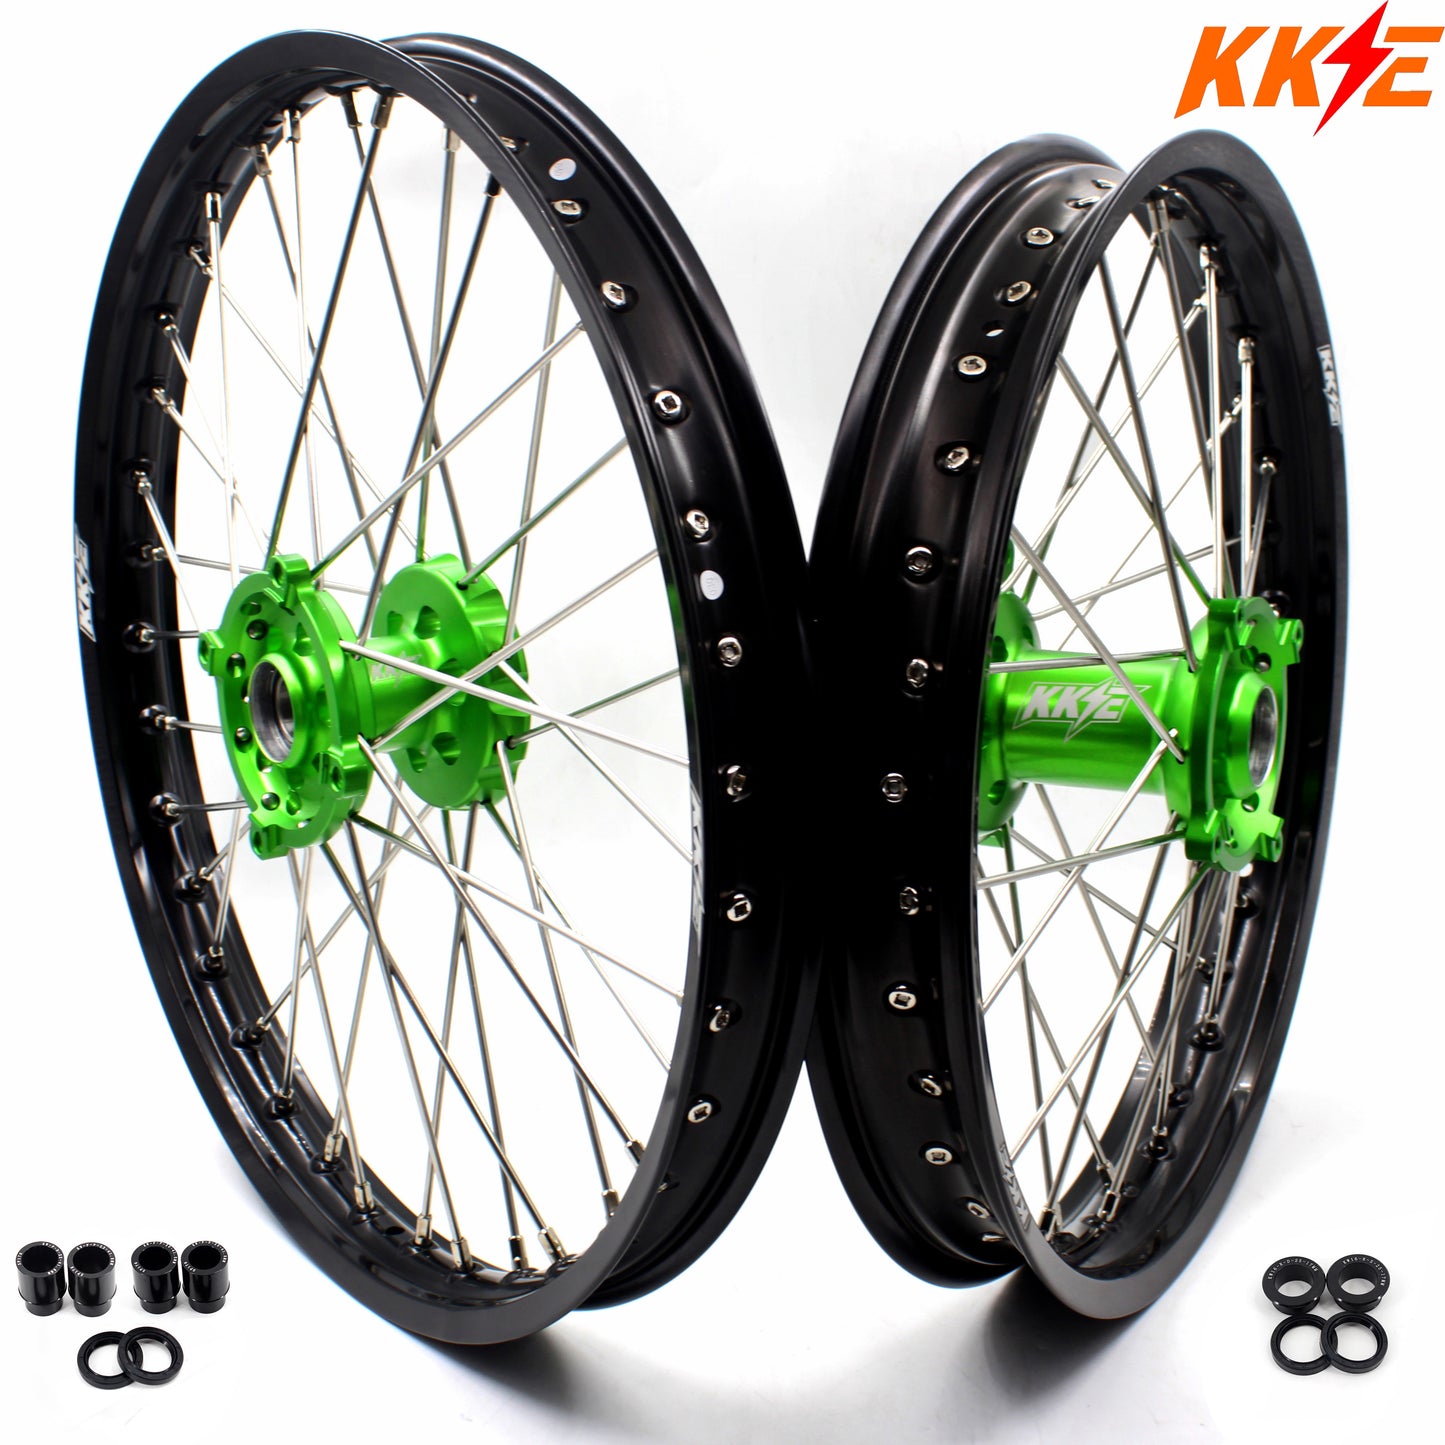 KKE 21/18 Enduro Wheels For KAWASAKI KX250F KX450F 2019-2021 KX450X KX450 2019-2023